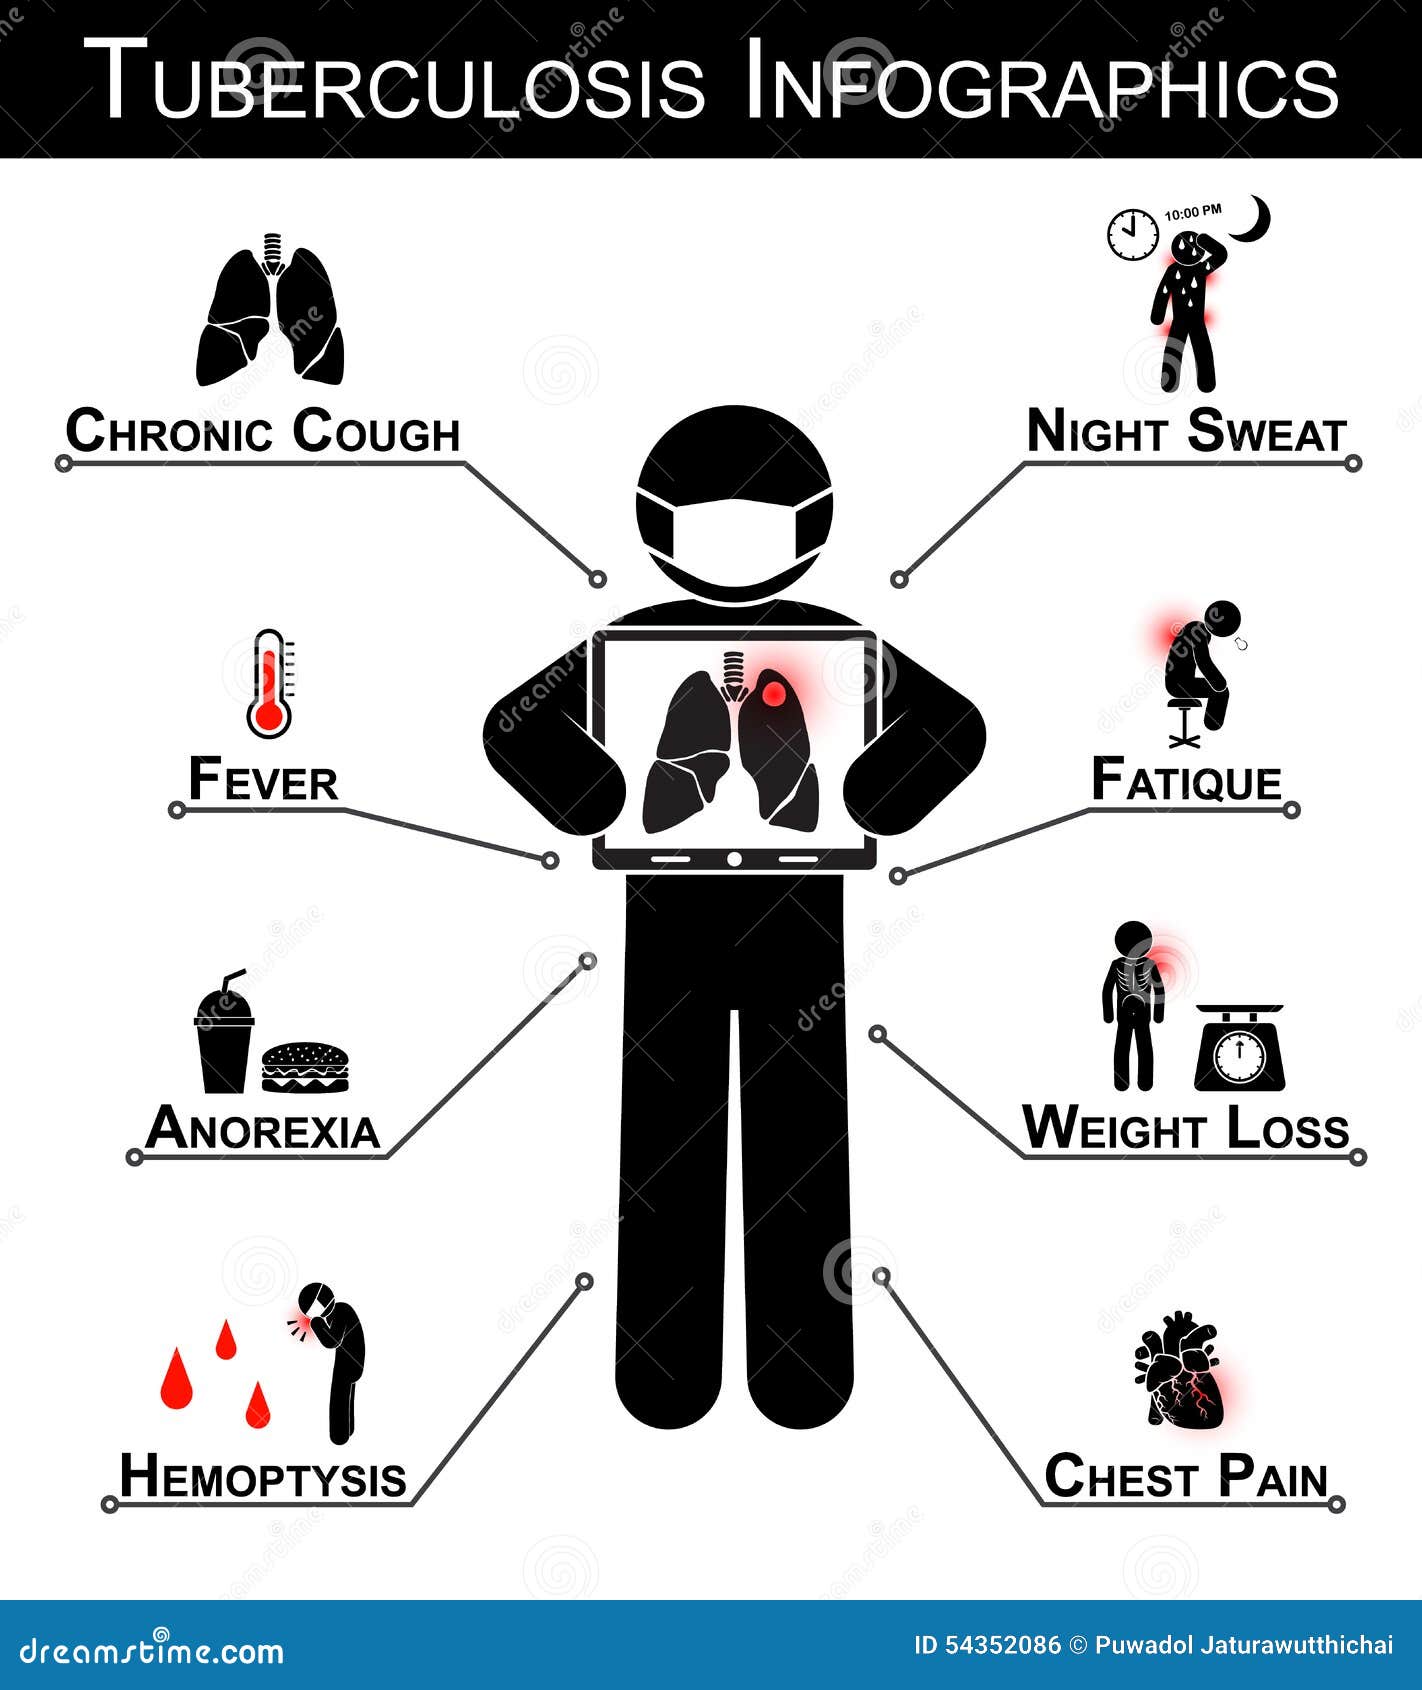 tuberculosis infographics